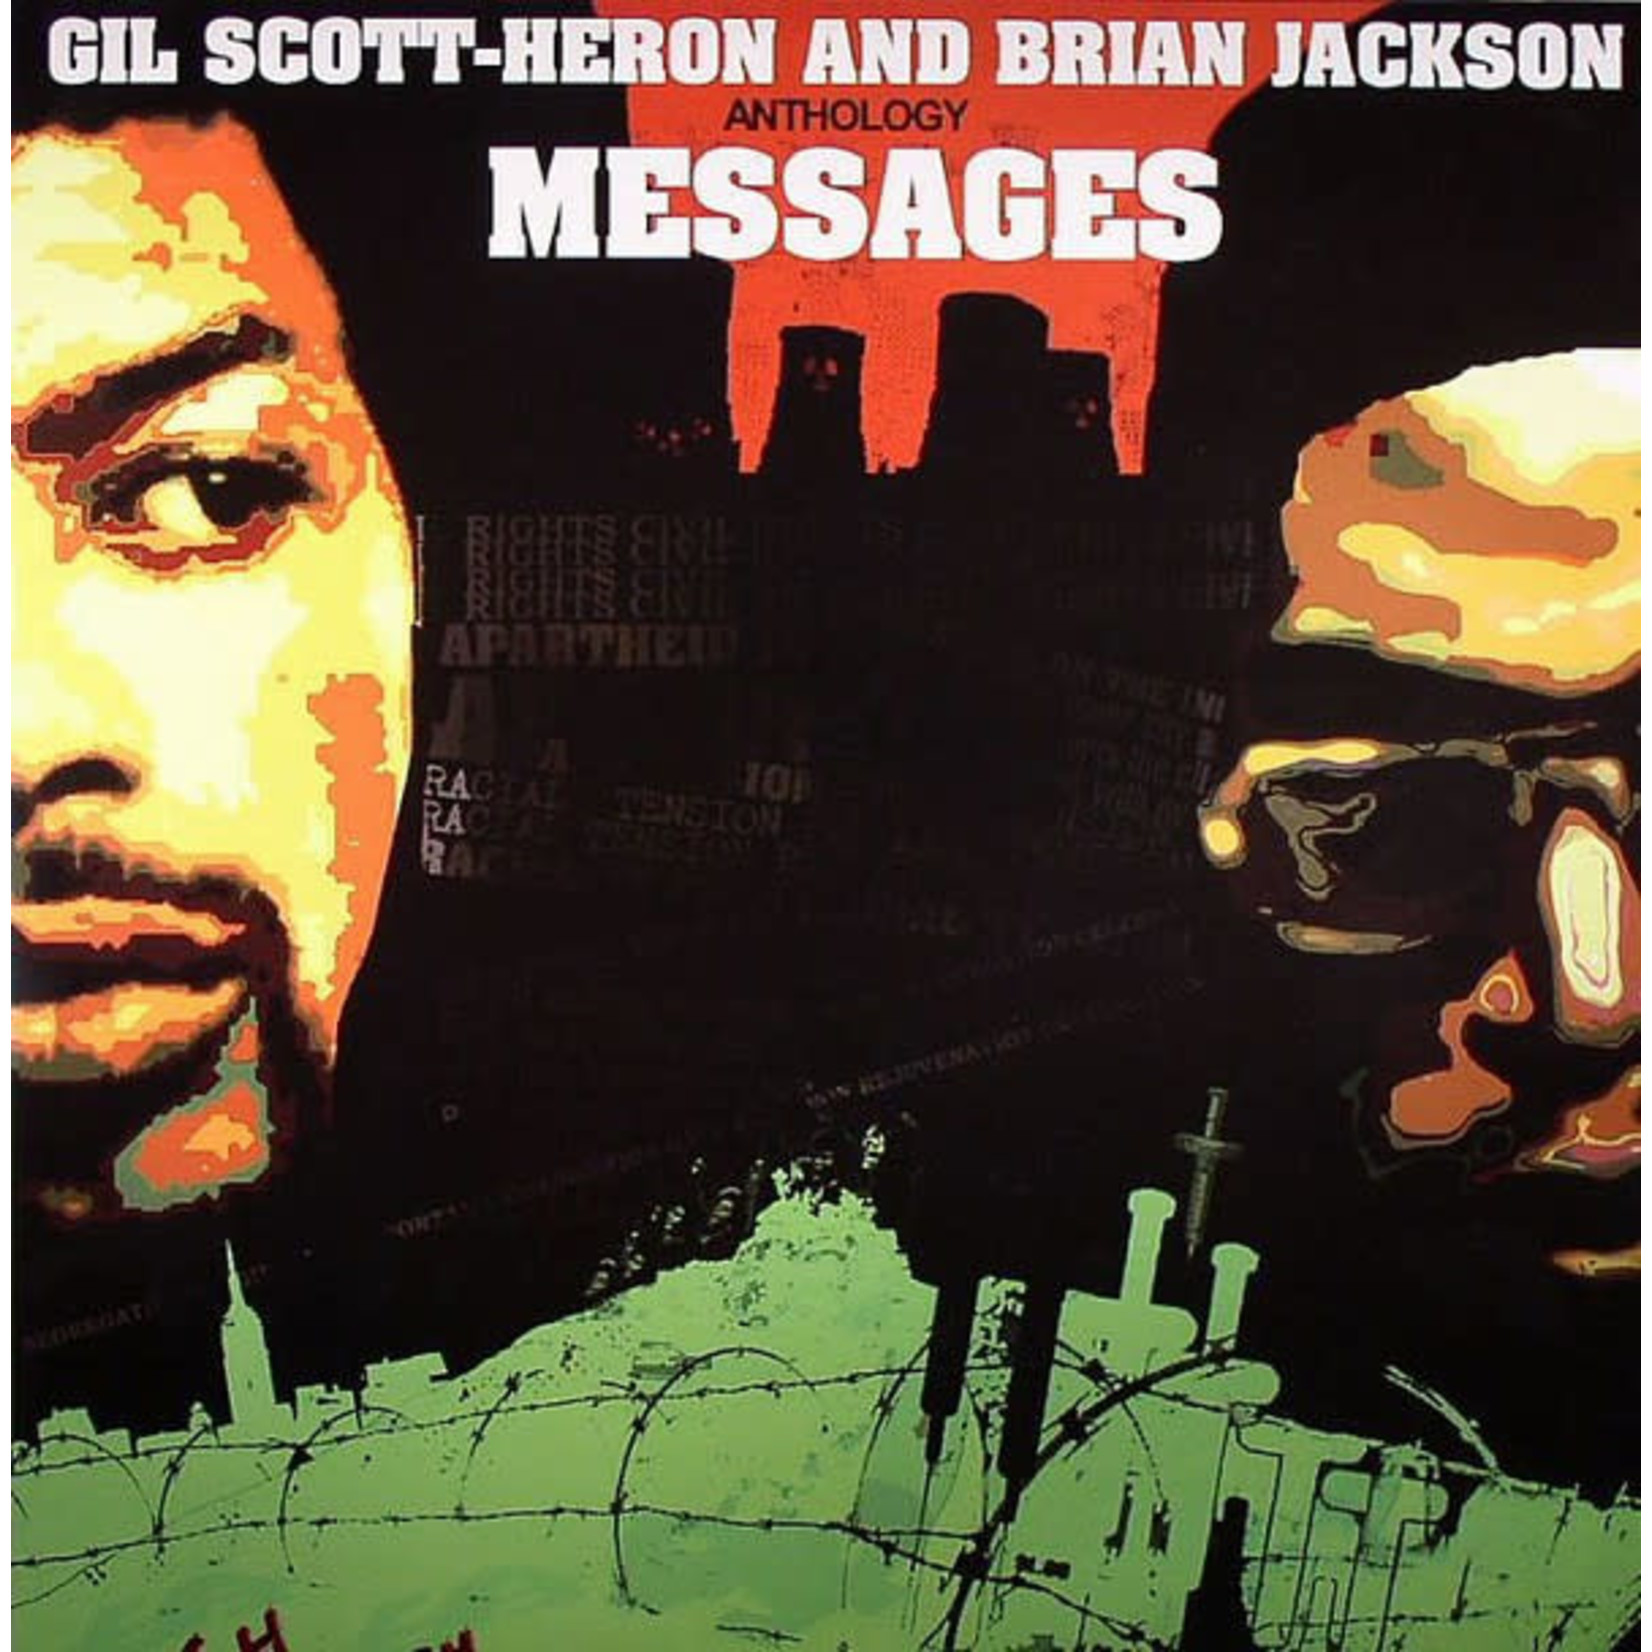 [New] Gil Scott-Heron & Brian Jackson - Anthology: Messages (2LP)